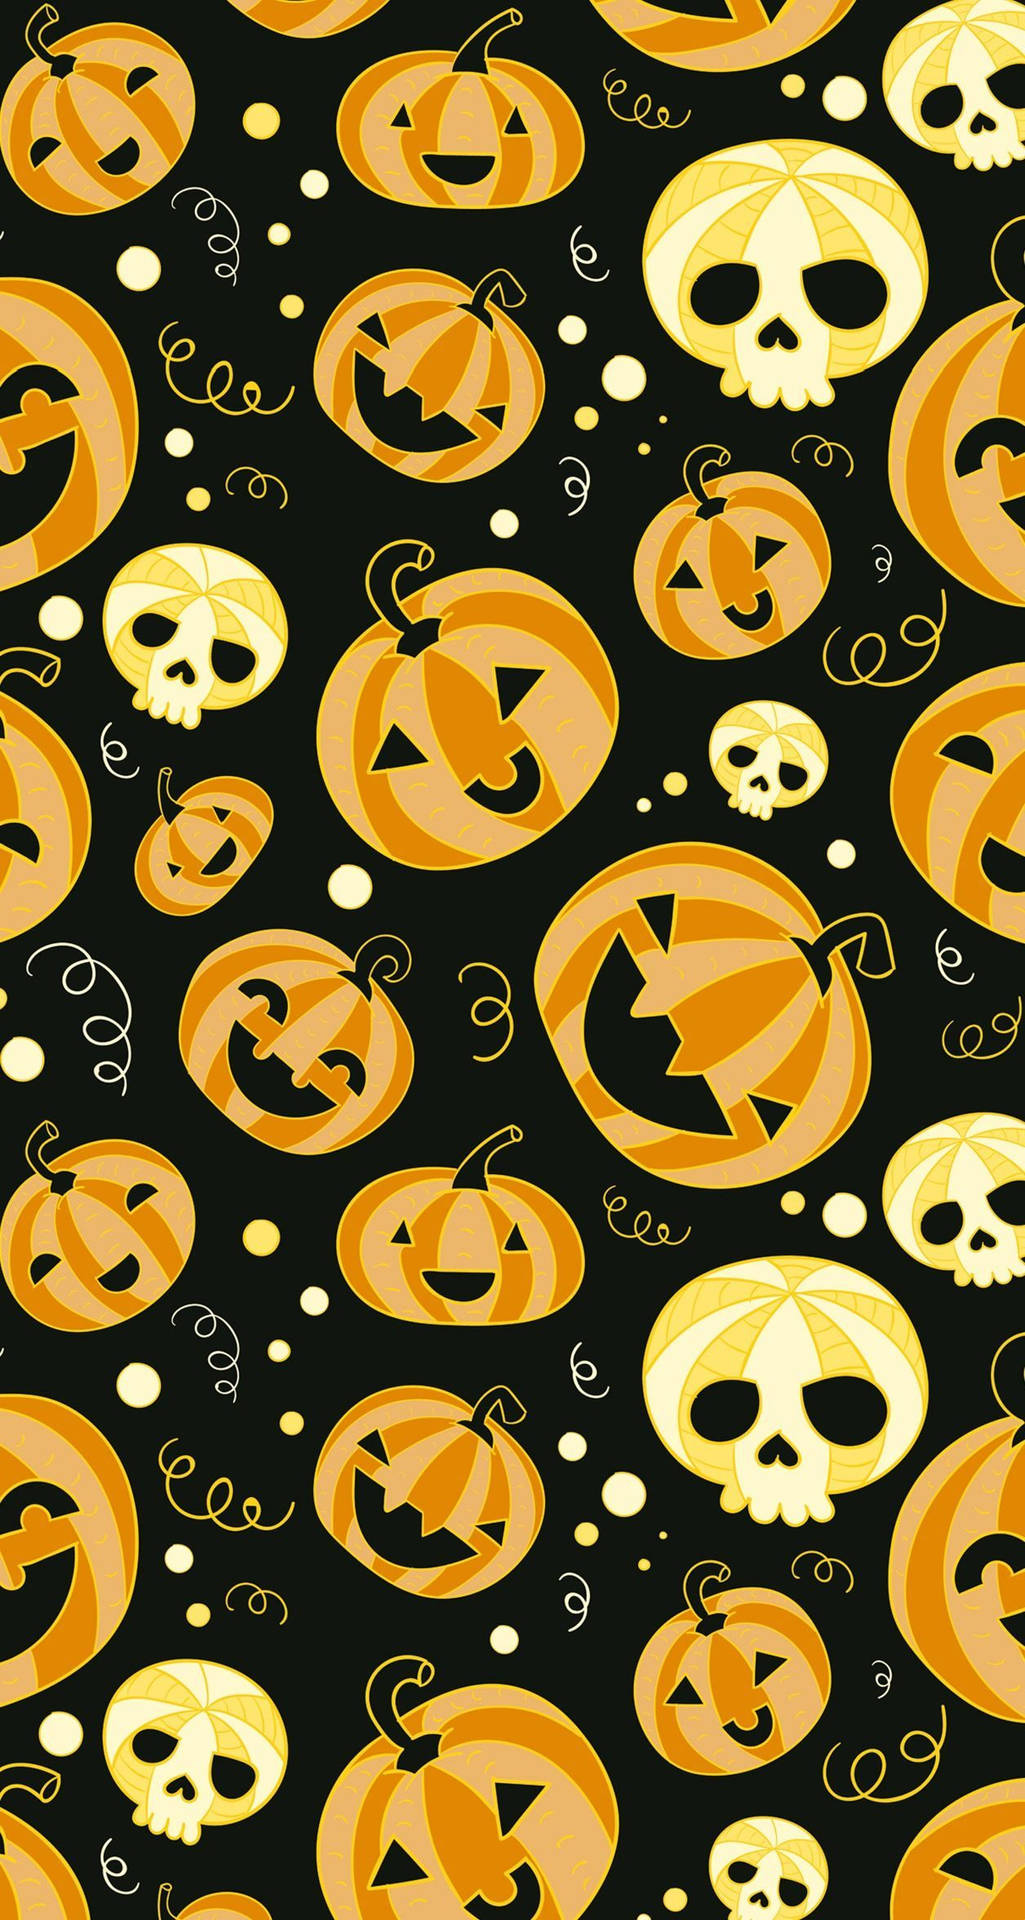 Get ready for a spook-tacular season! Wallpaper